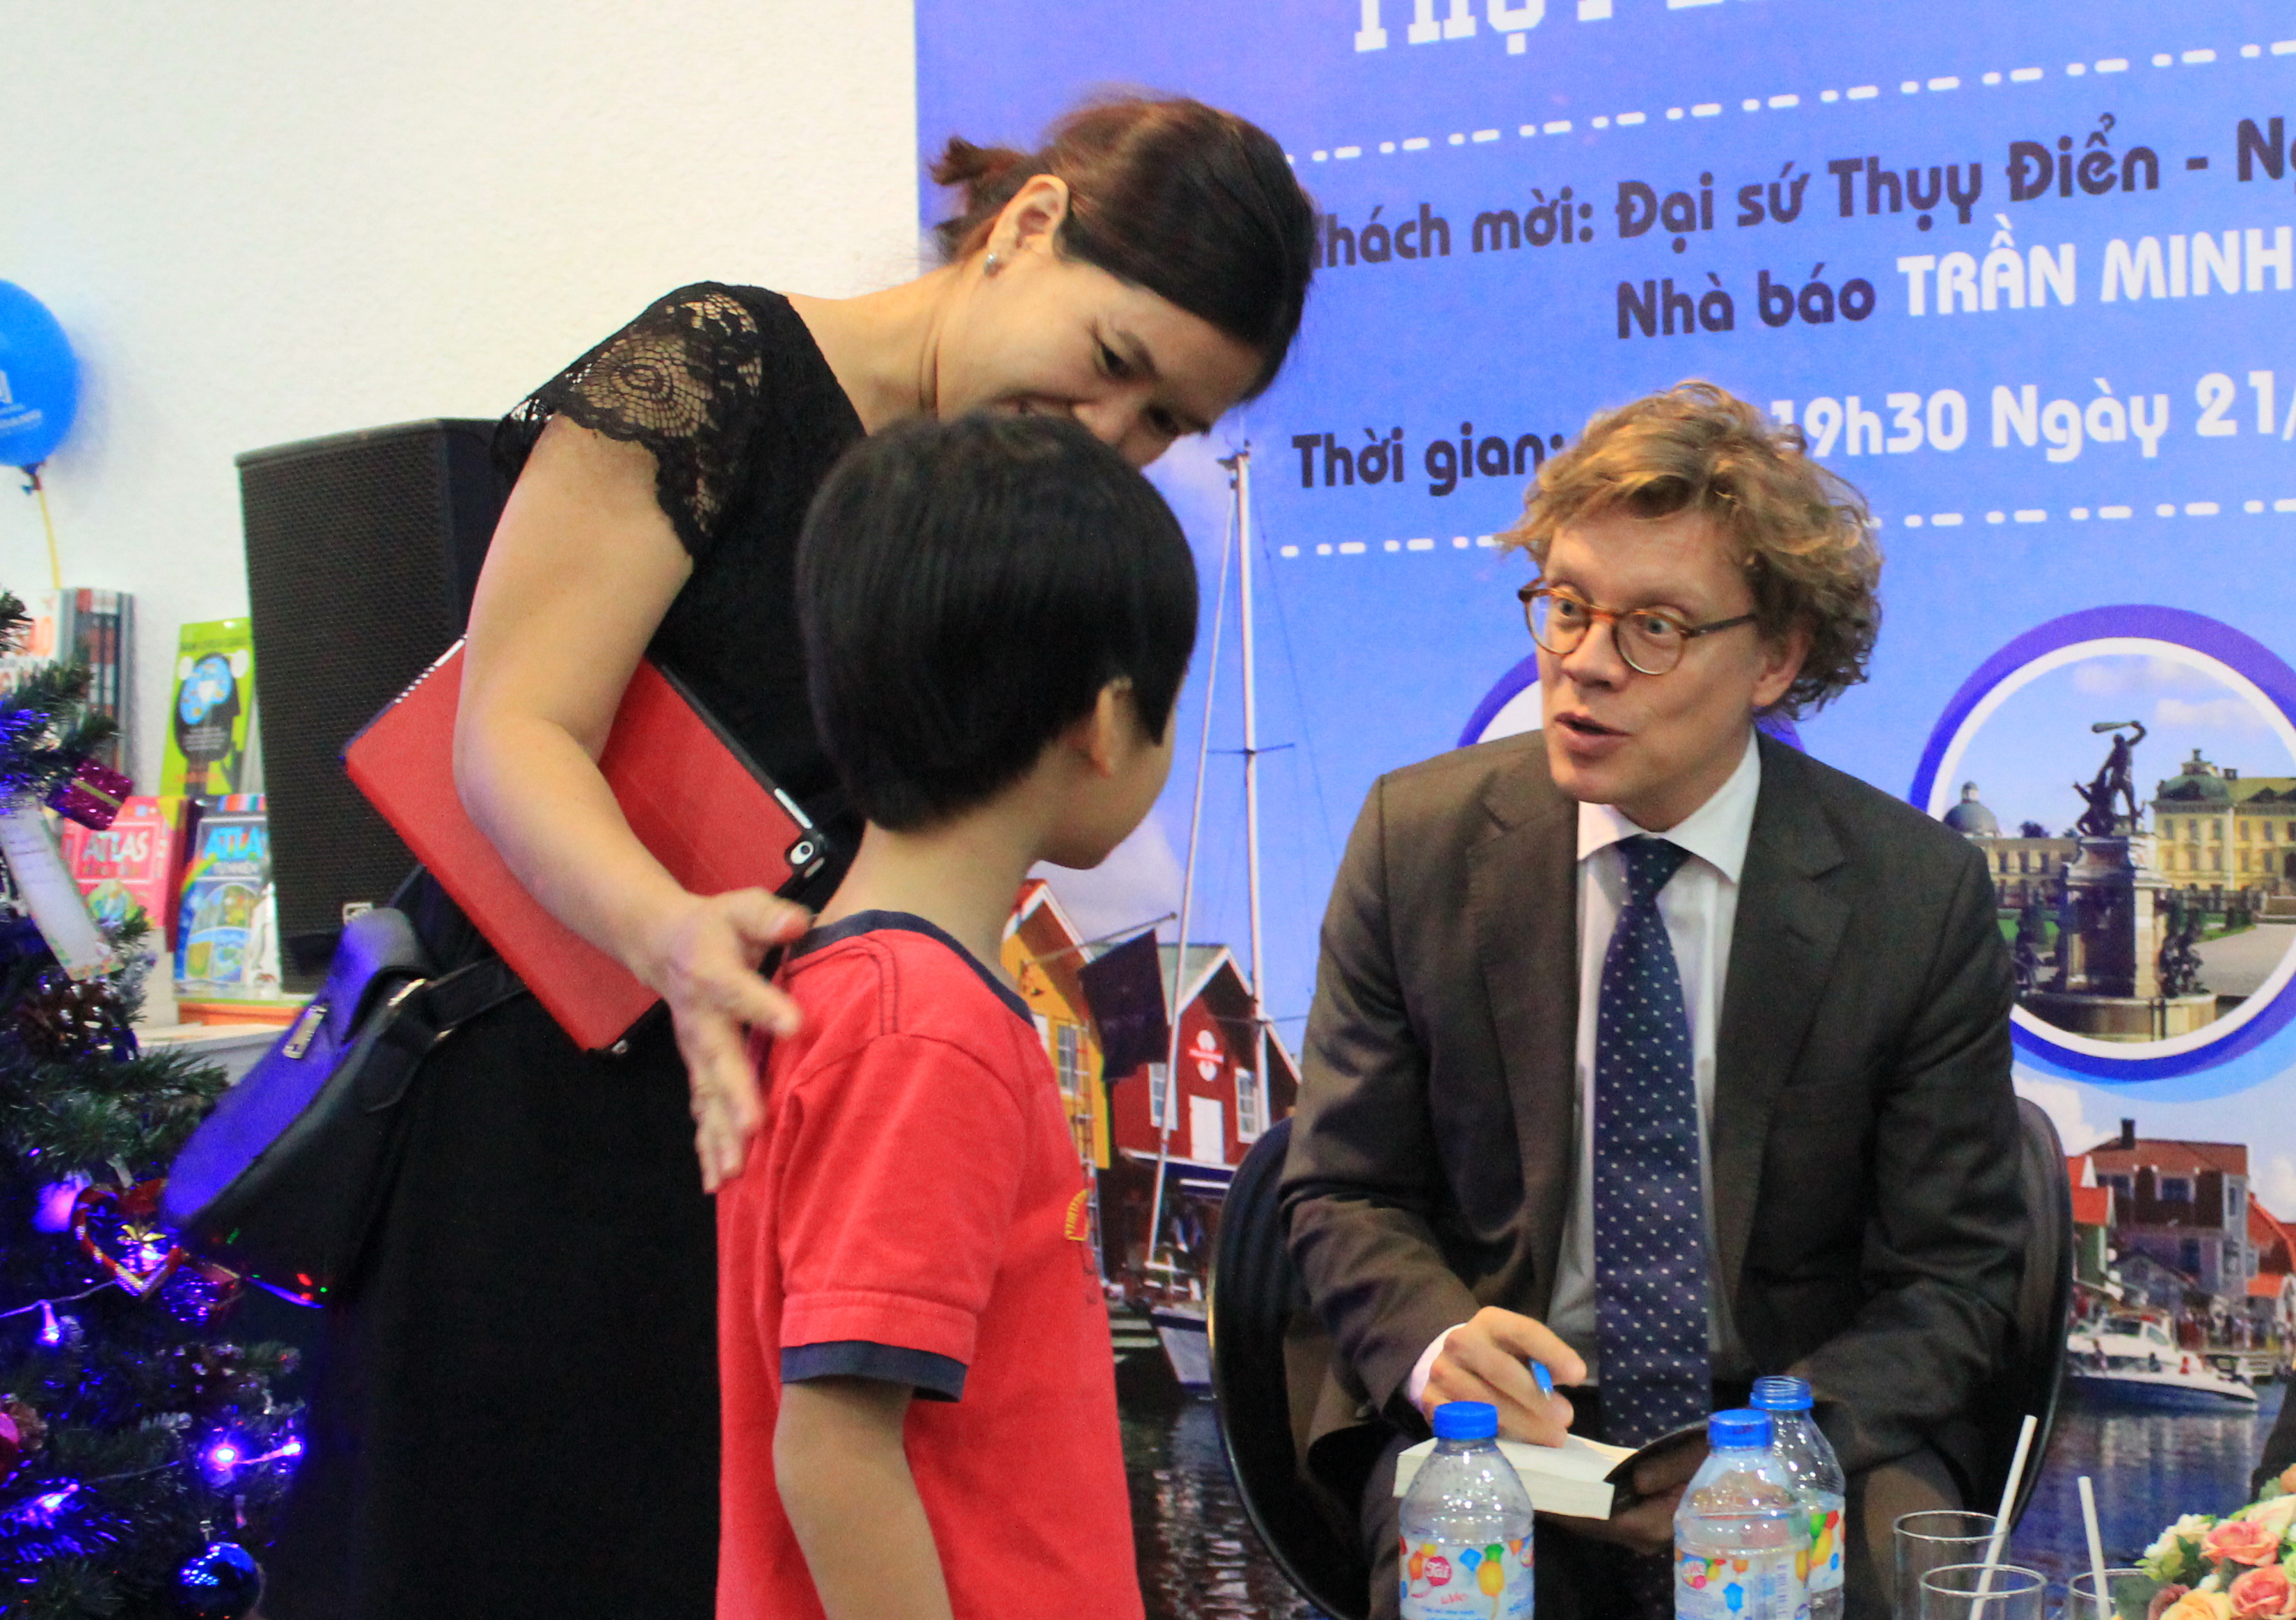 Swedish ambassador meets with Ho Chi Minh City bookworms at Ibrahimovic autobiography event